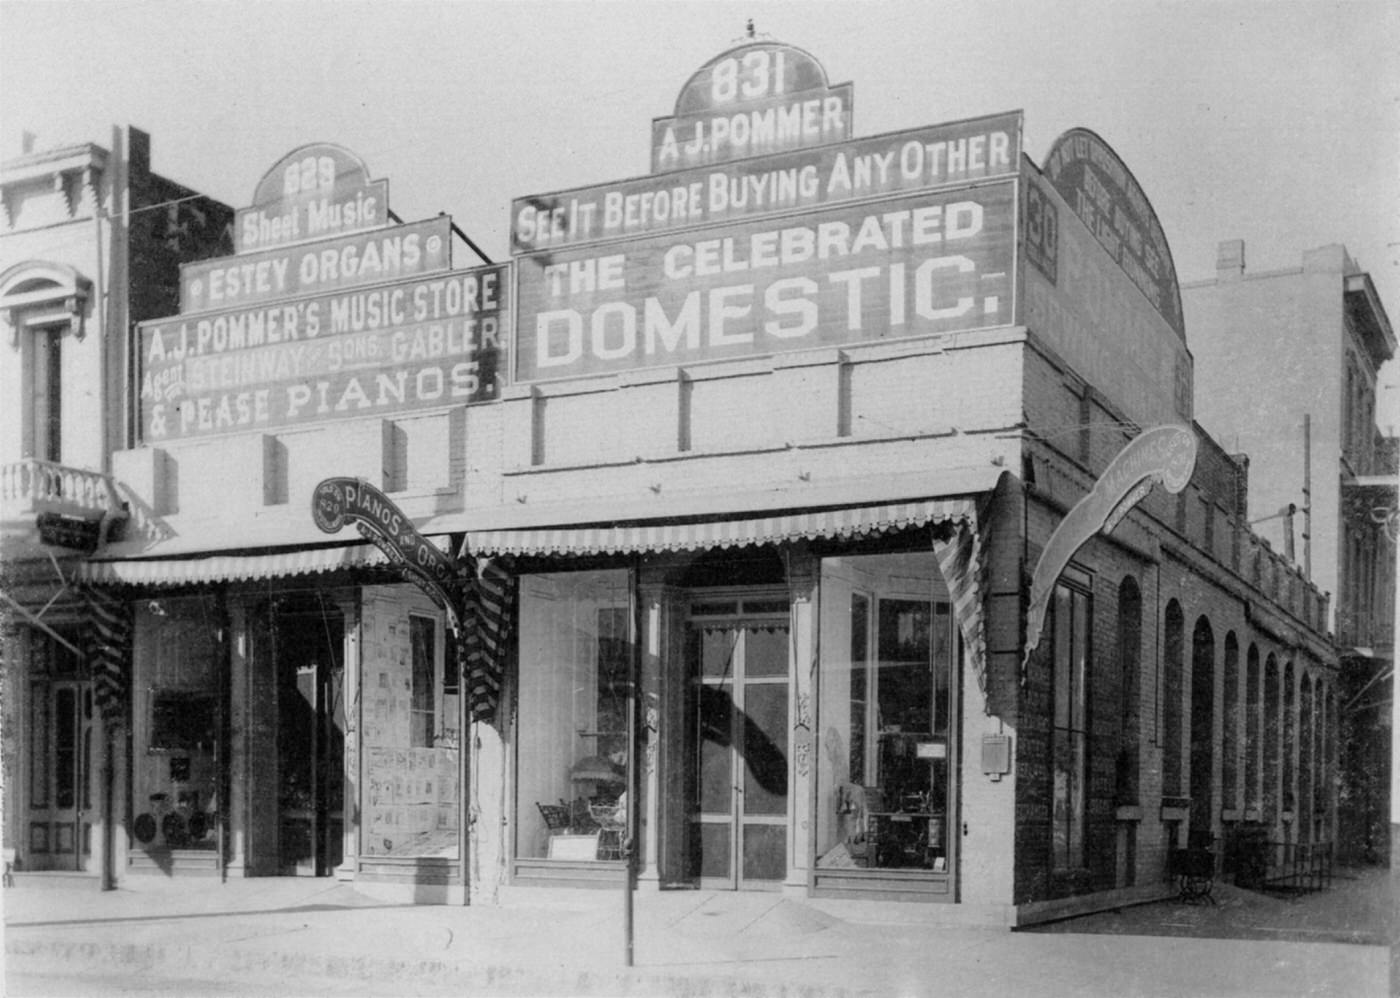 Shades of Sacramento - A. J. Pommer's Building, 1896